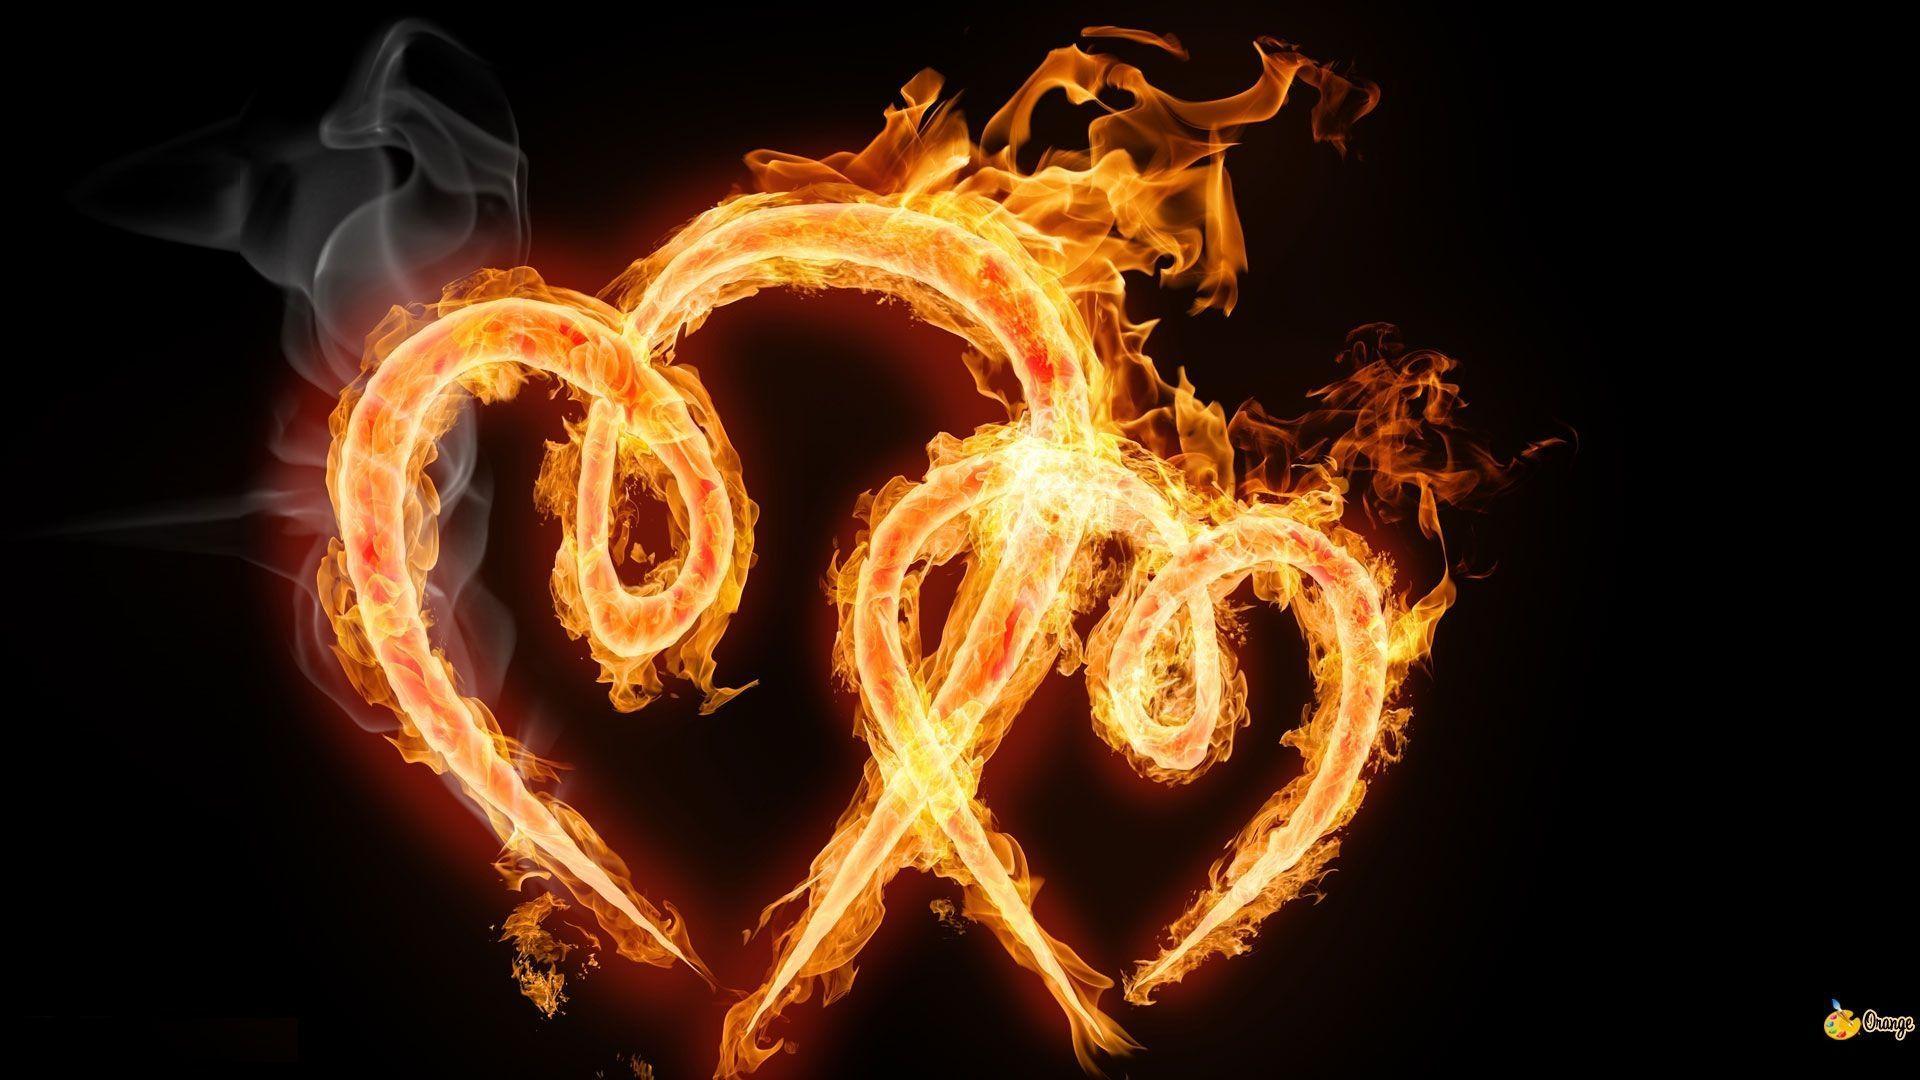 Fire Heart Background